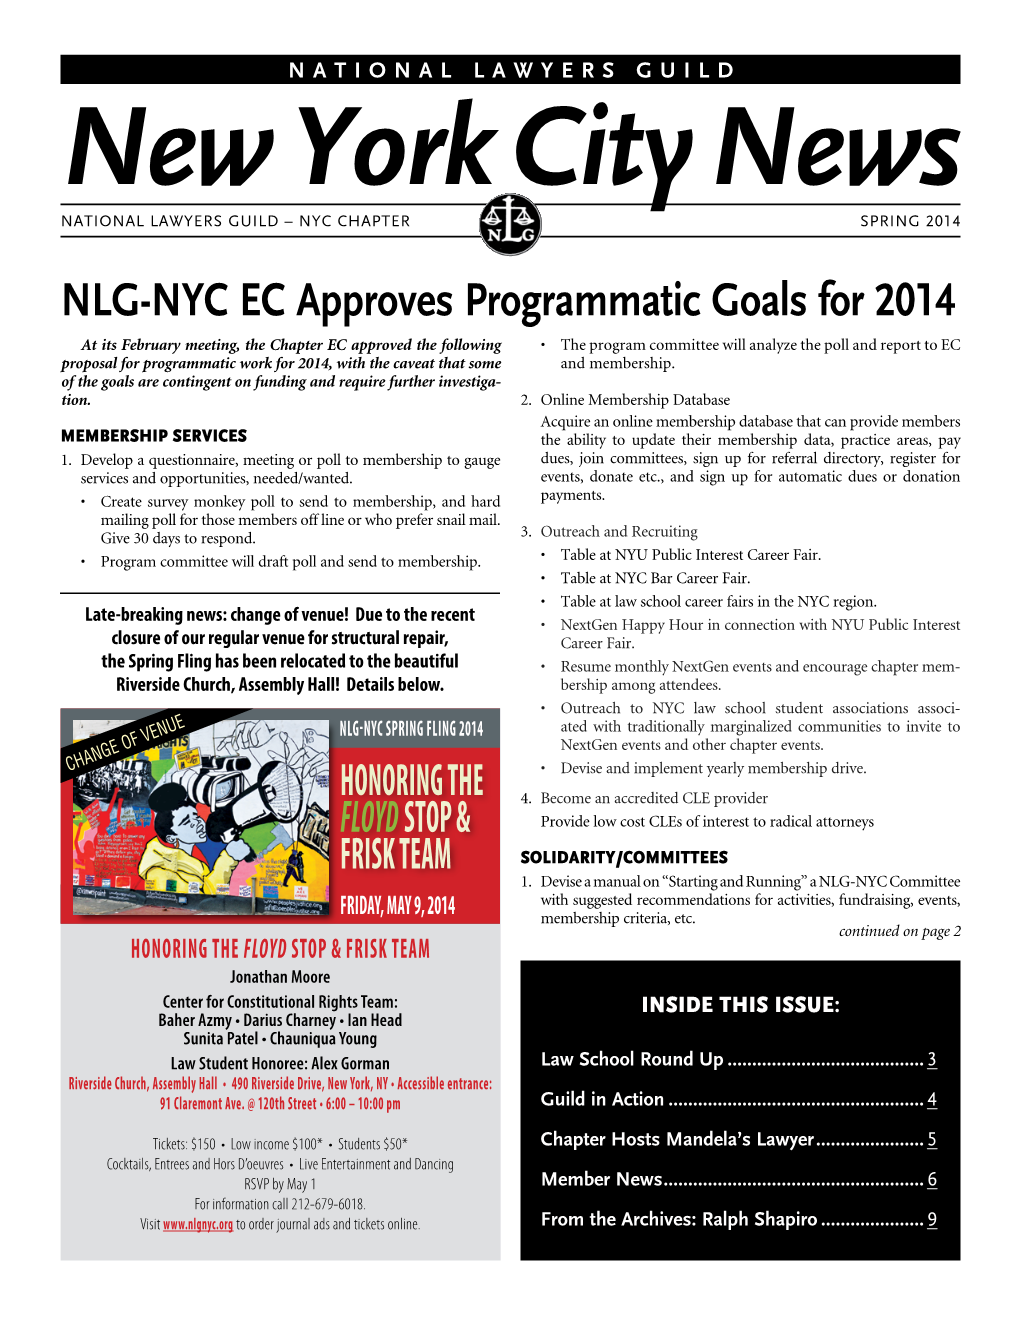 NLG-NYC EC Approves Programmatic Goals for 2014